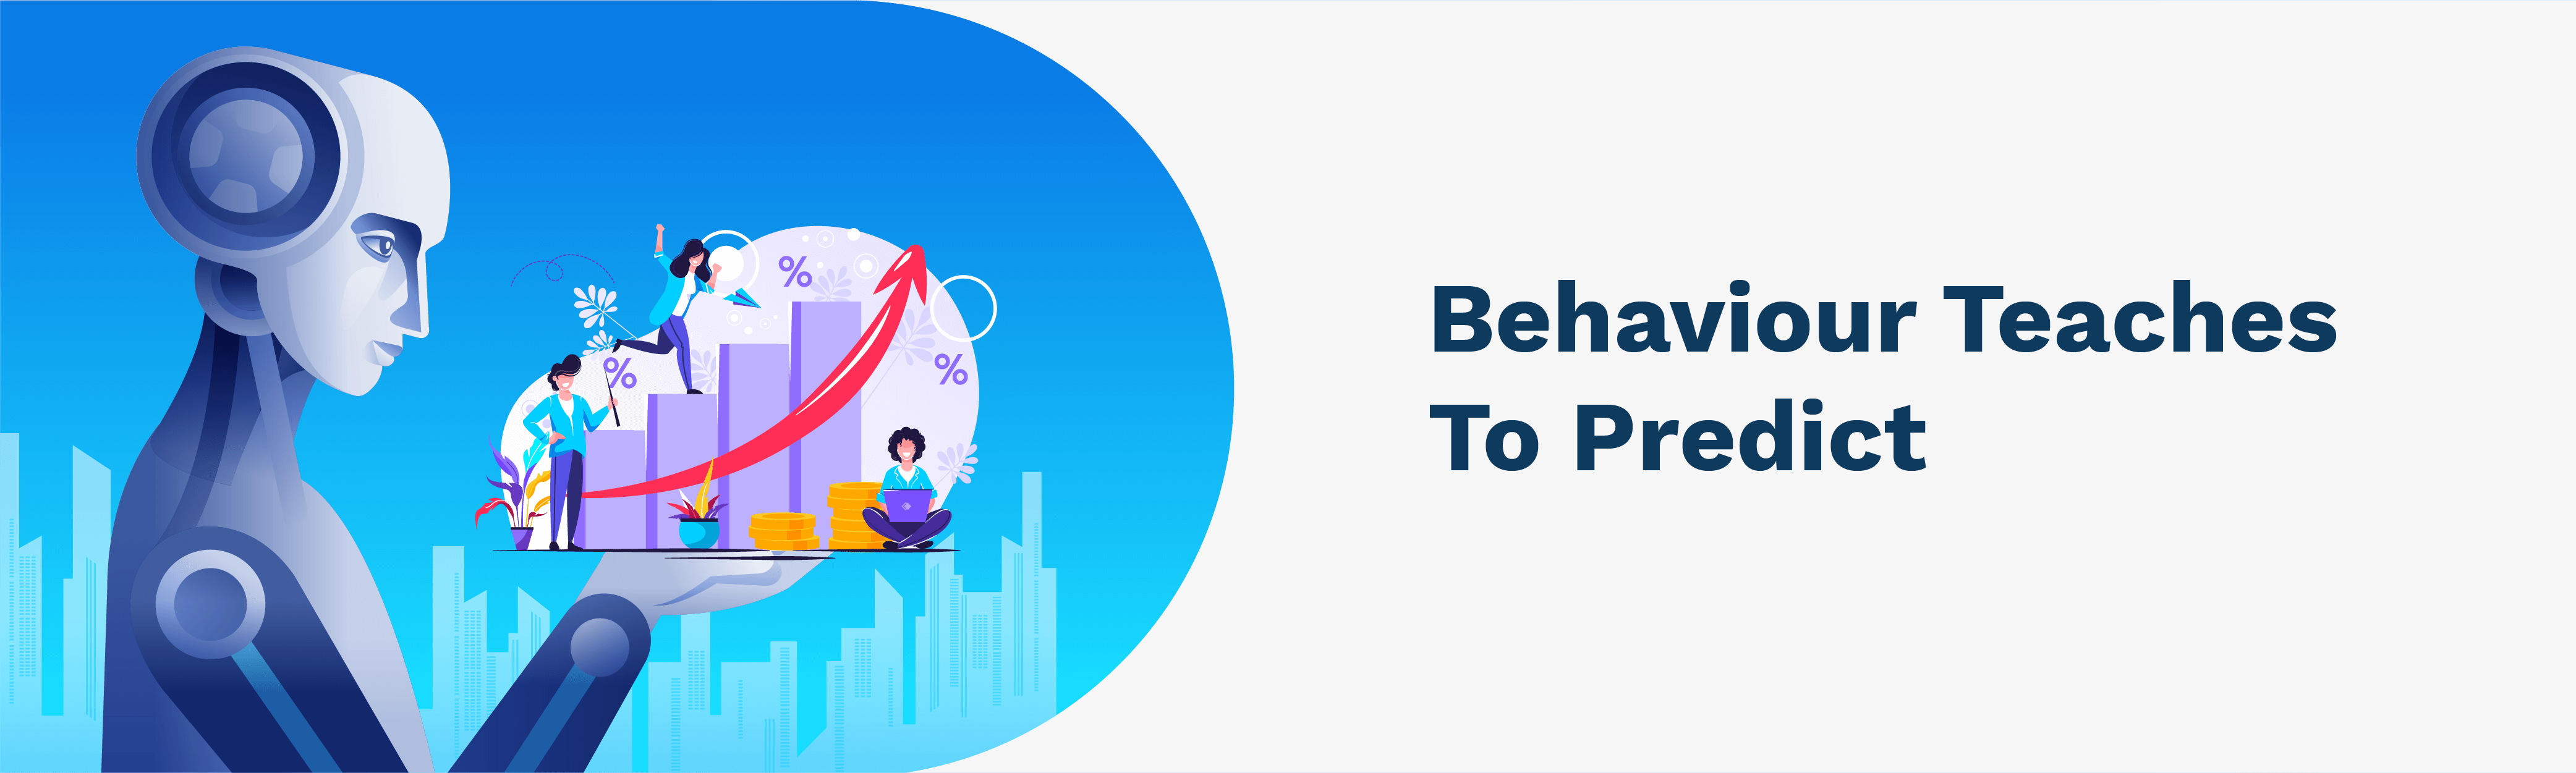 behaviour teaches to predict